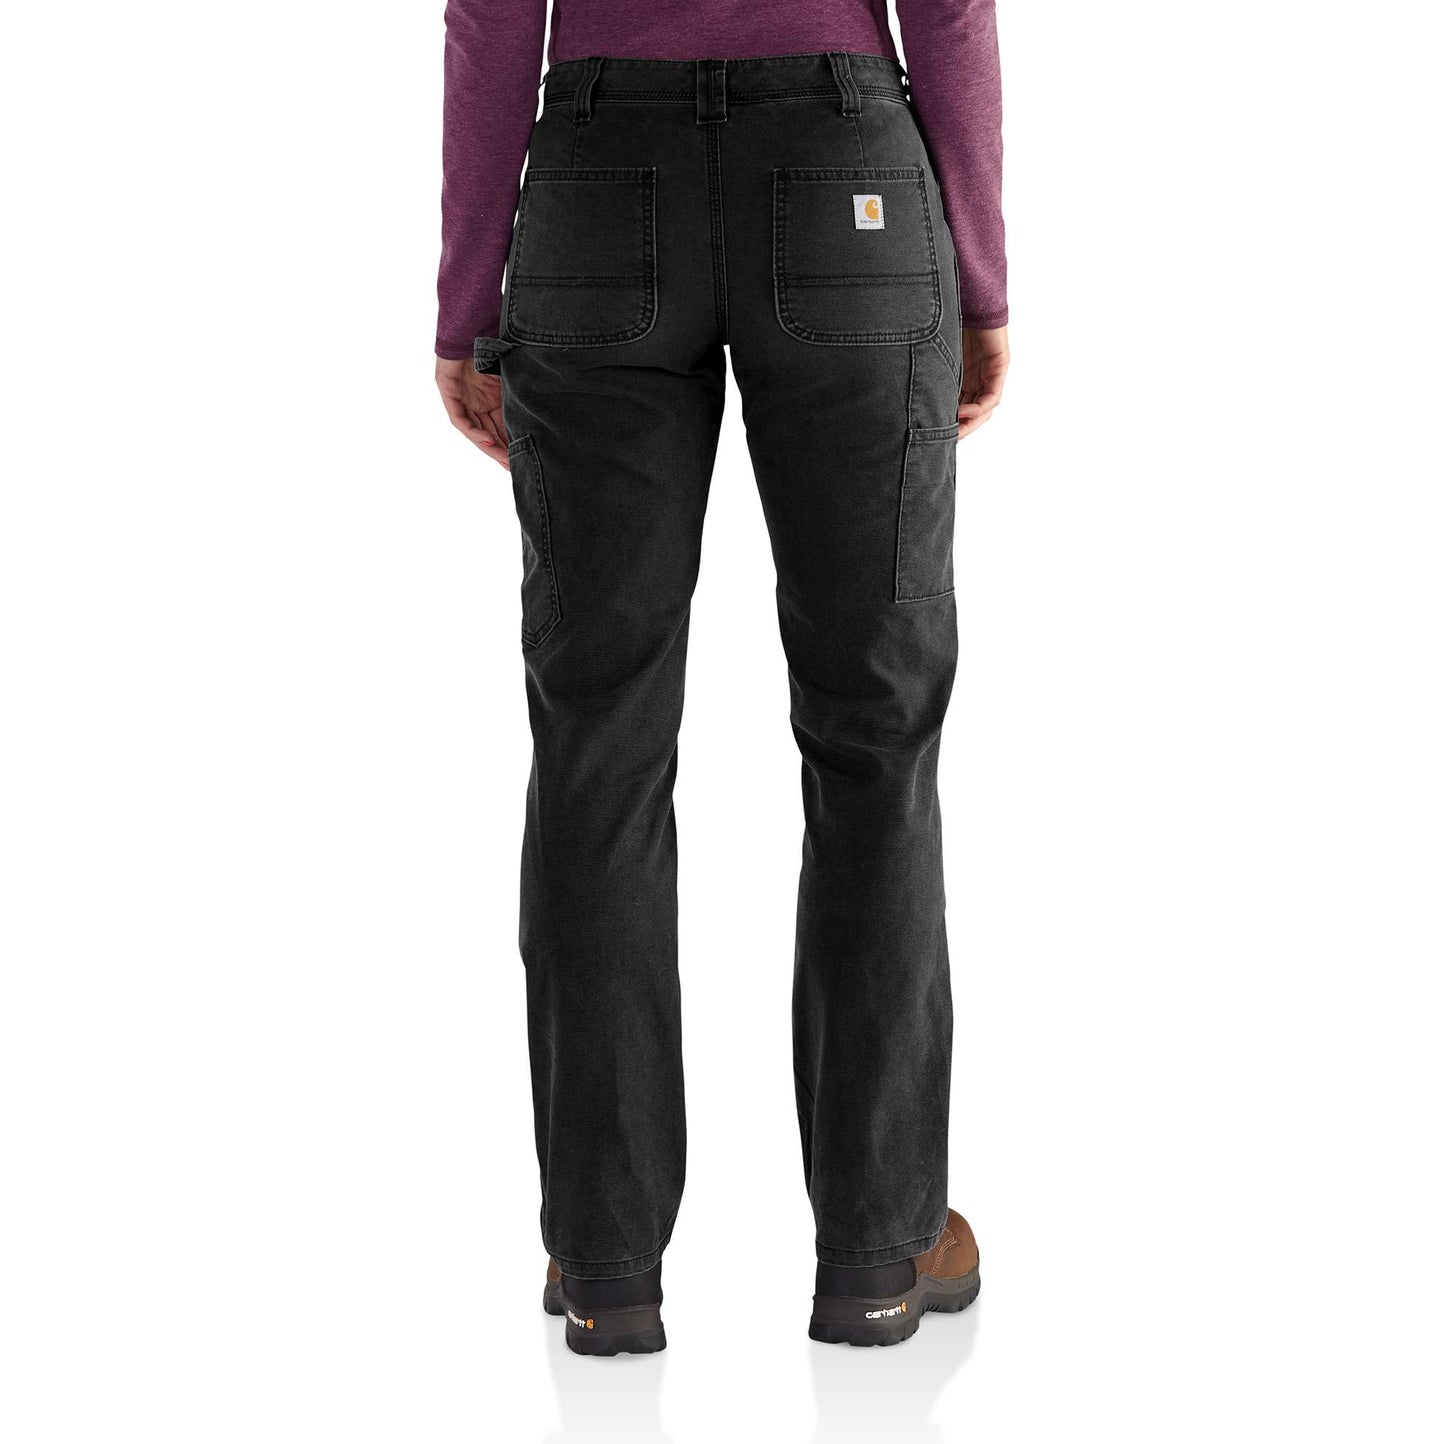 Carhartt Women's Rugged Flex Double-Front Work Pants